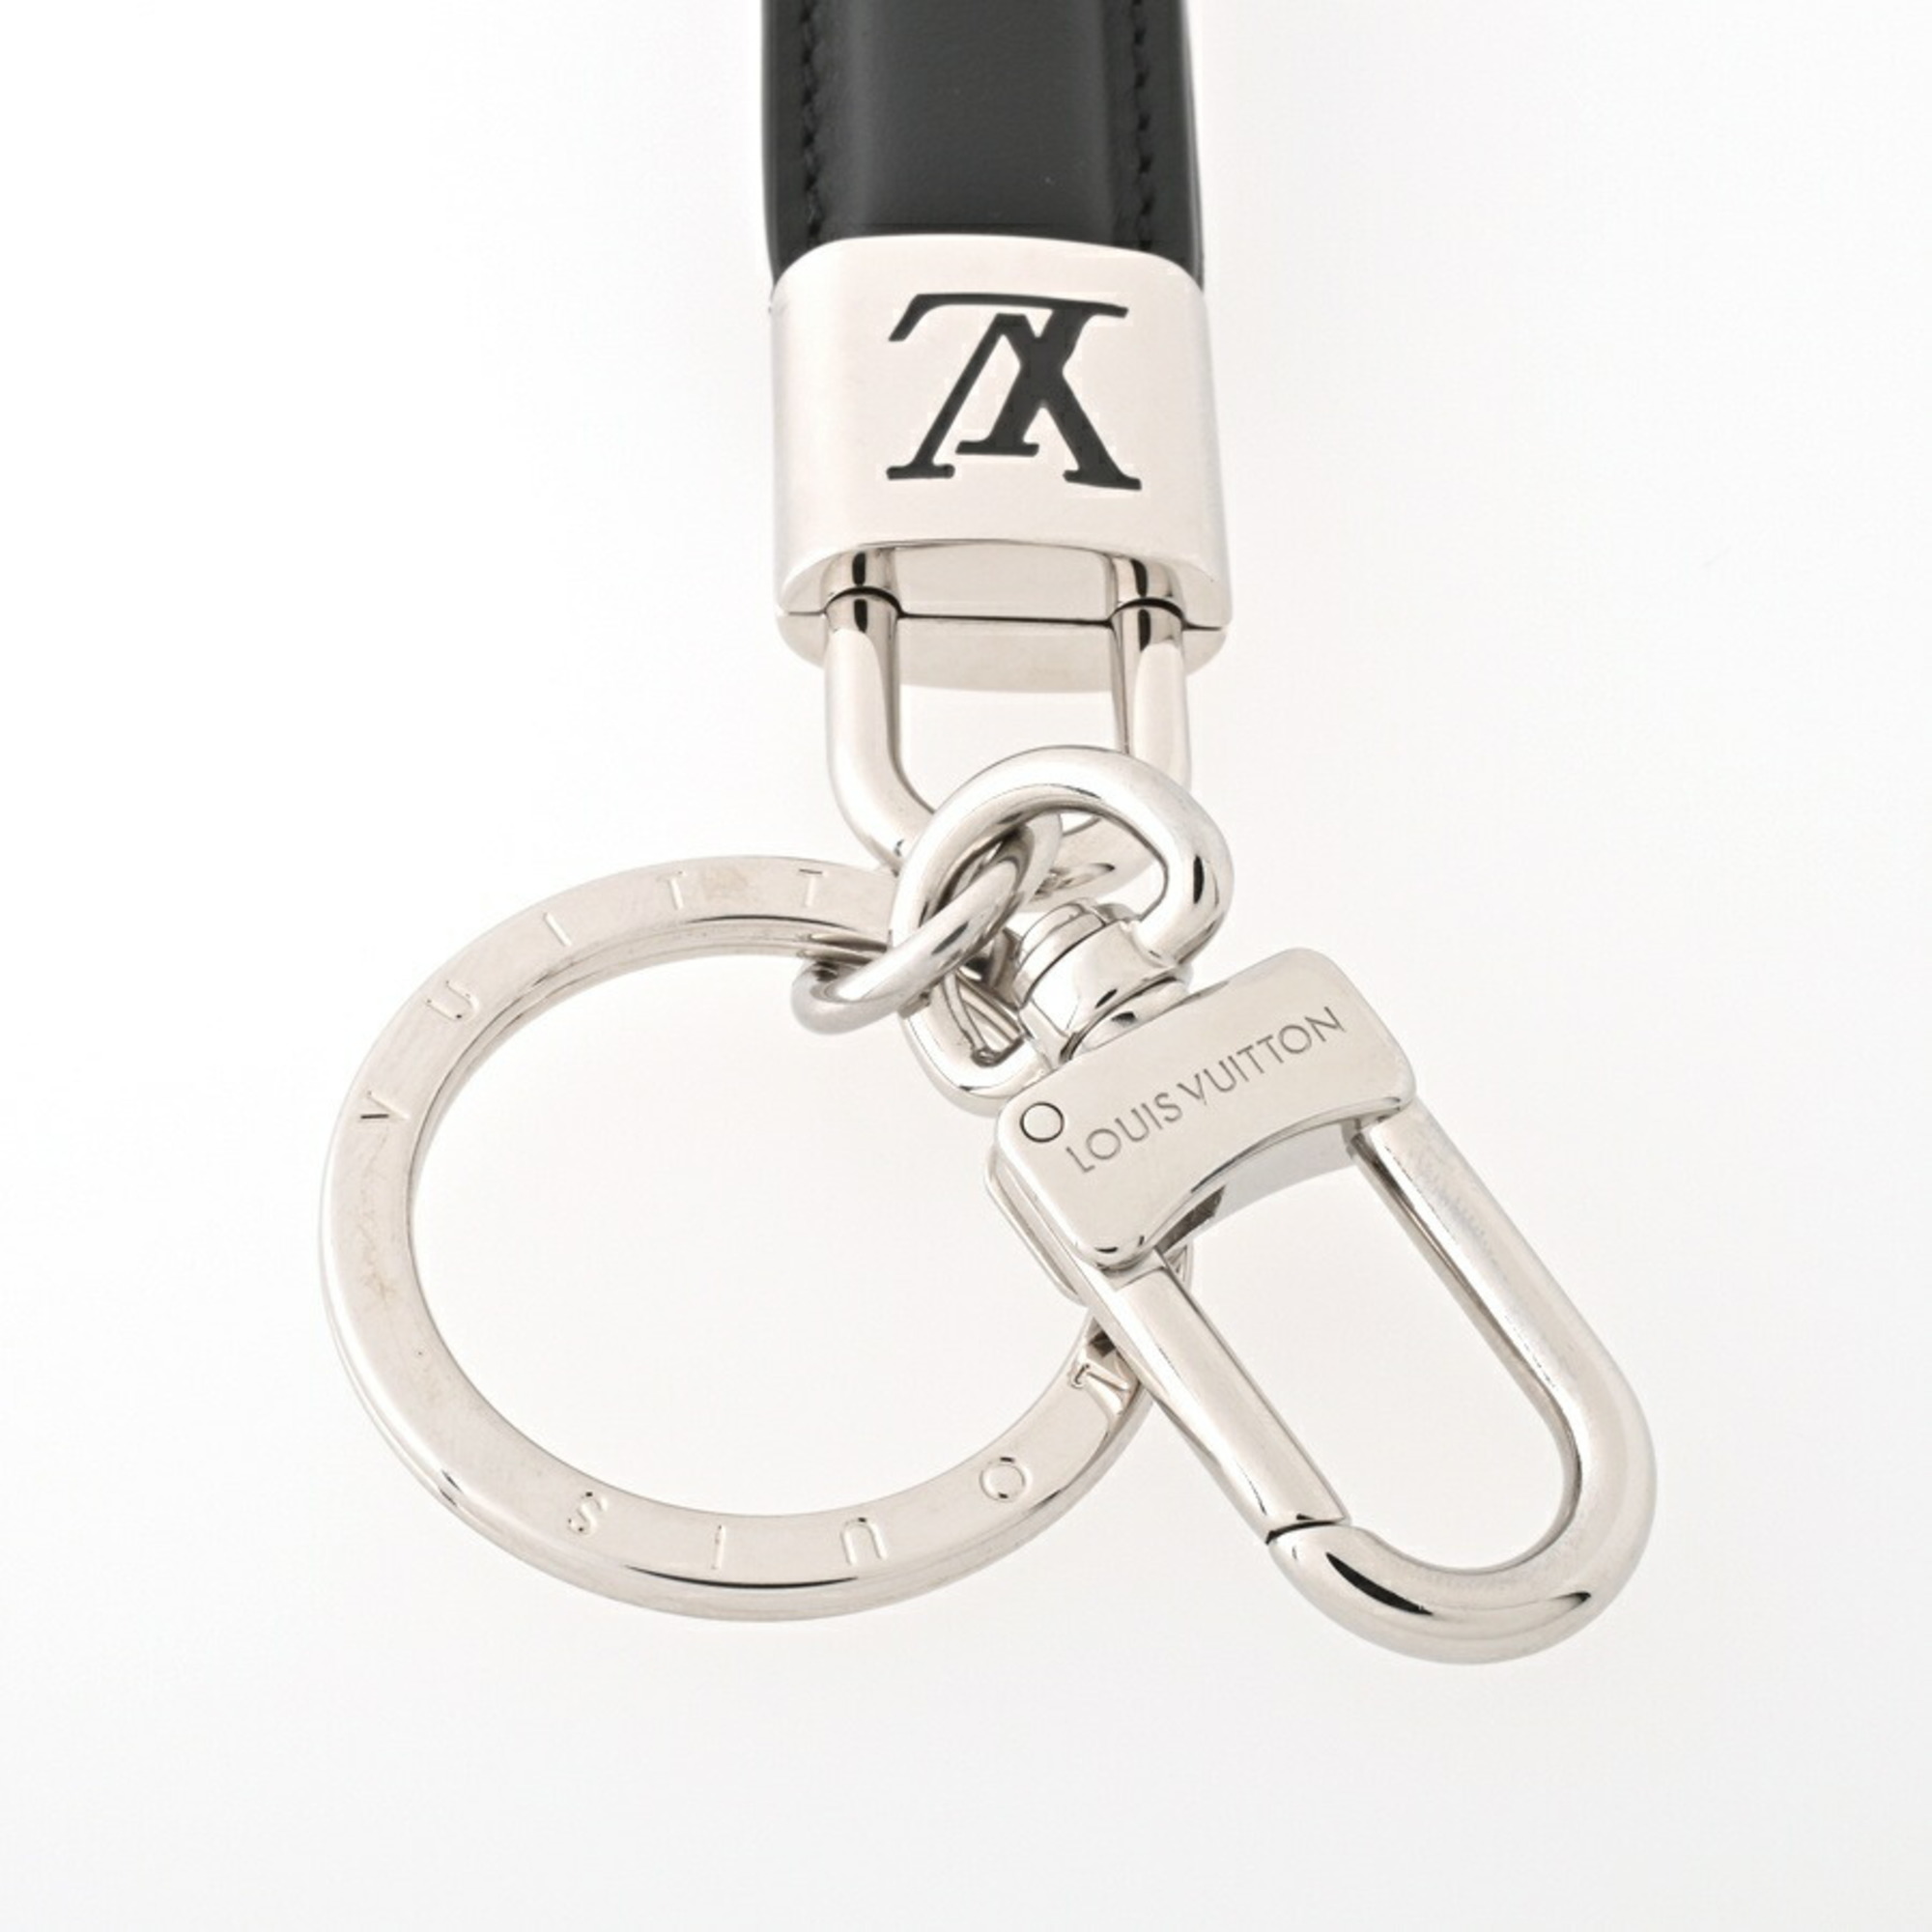 Louis Vuitton LOUIS VUITTON Keychain LV Padlock M00745 Silver/Noir (Black)